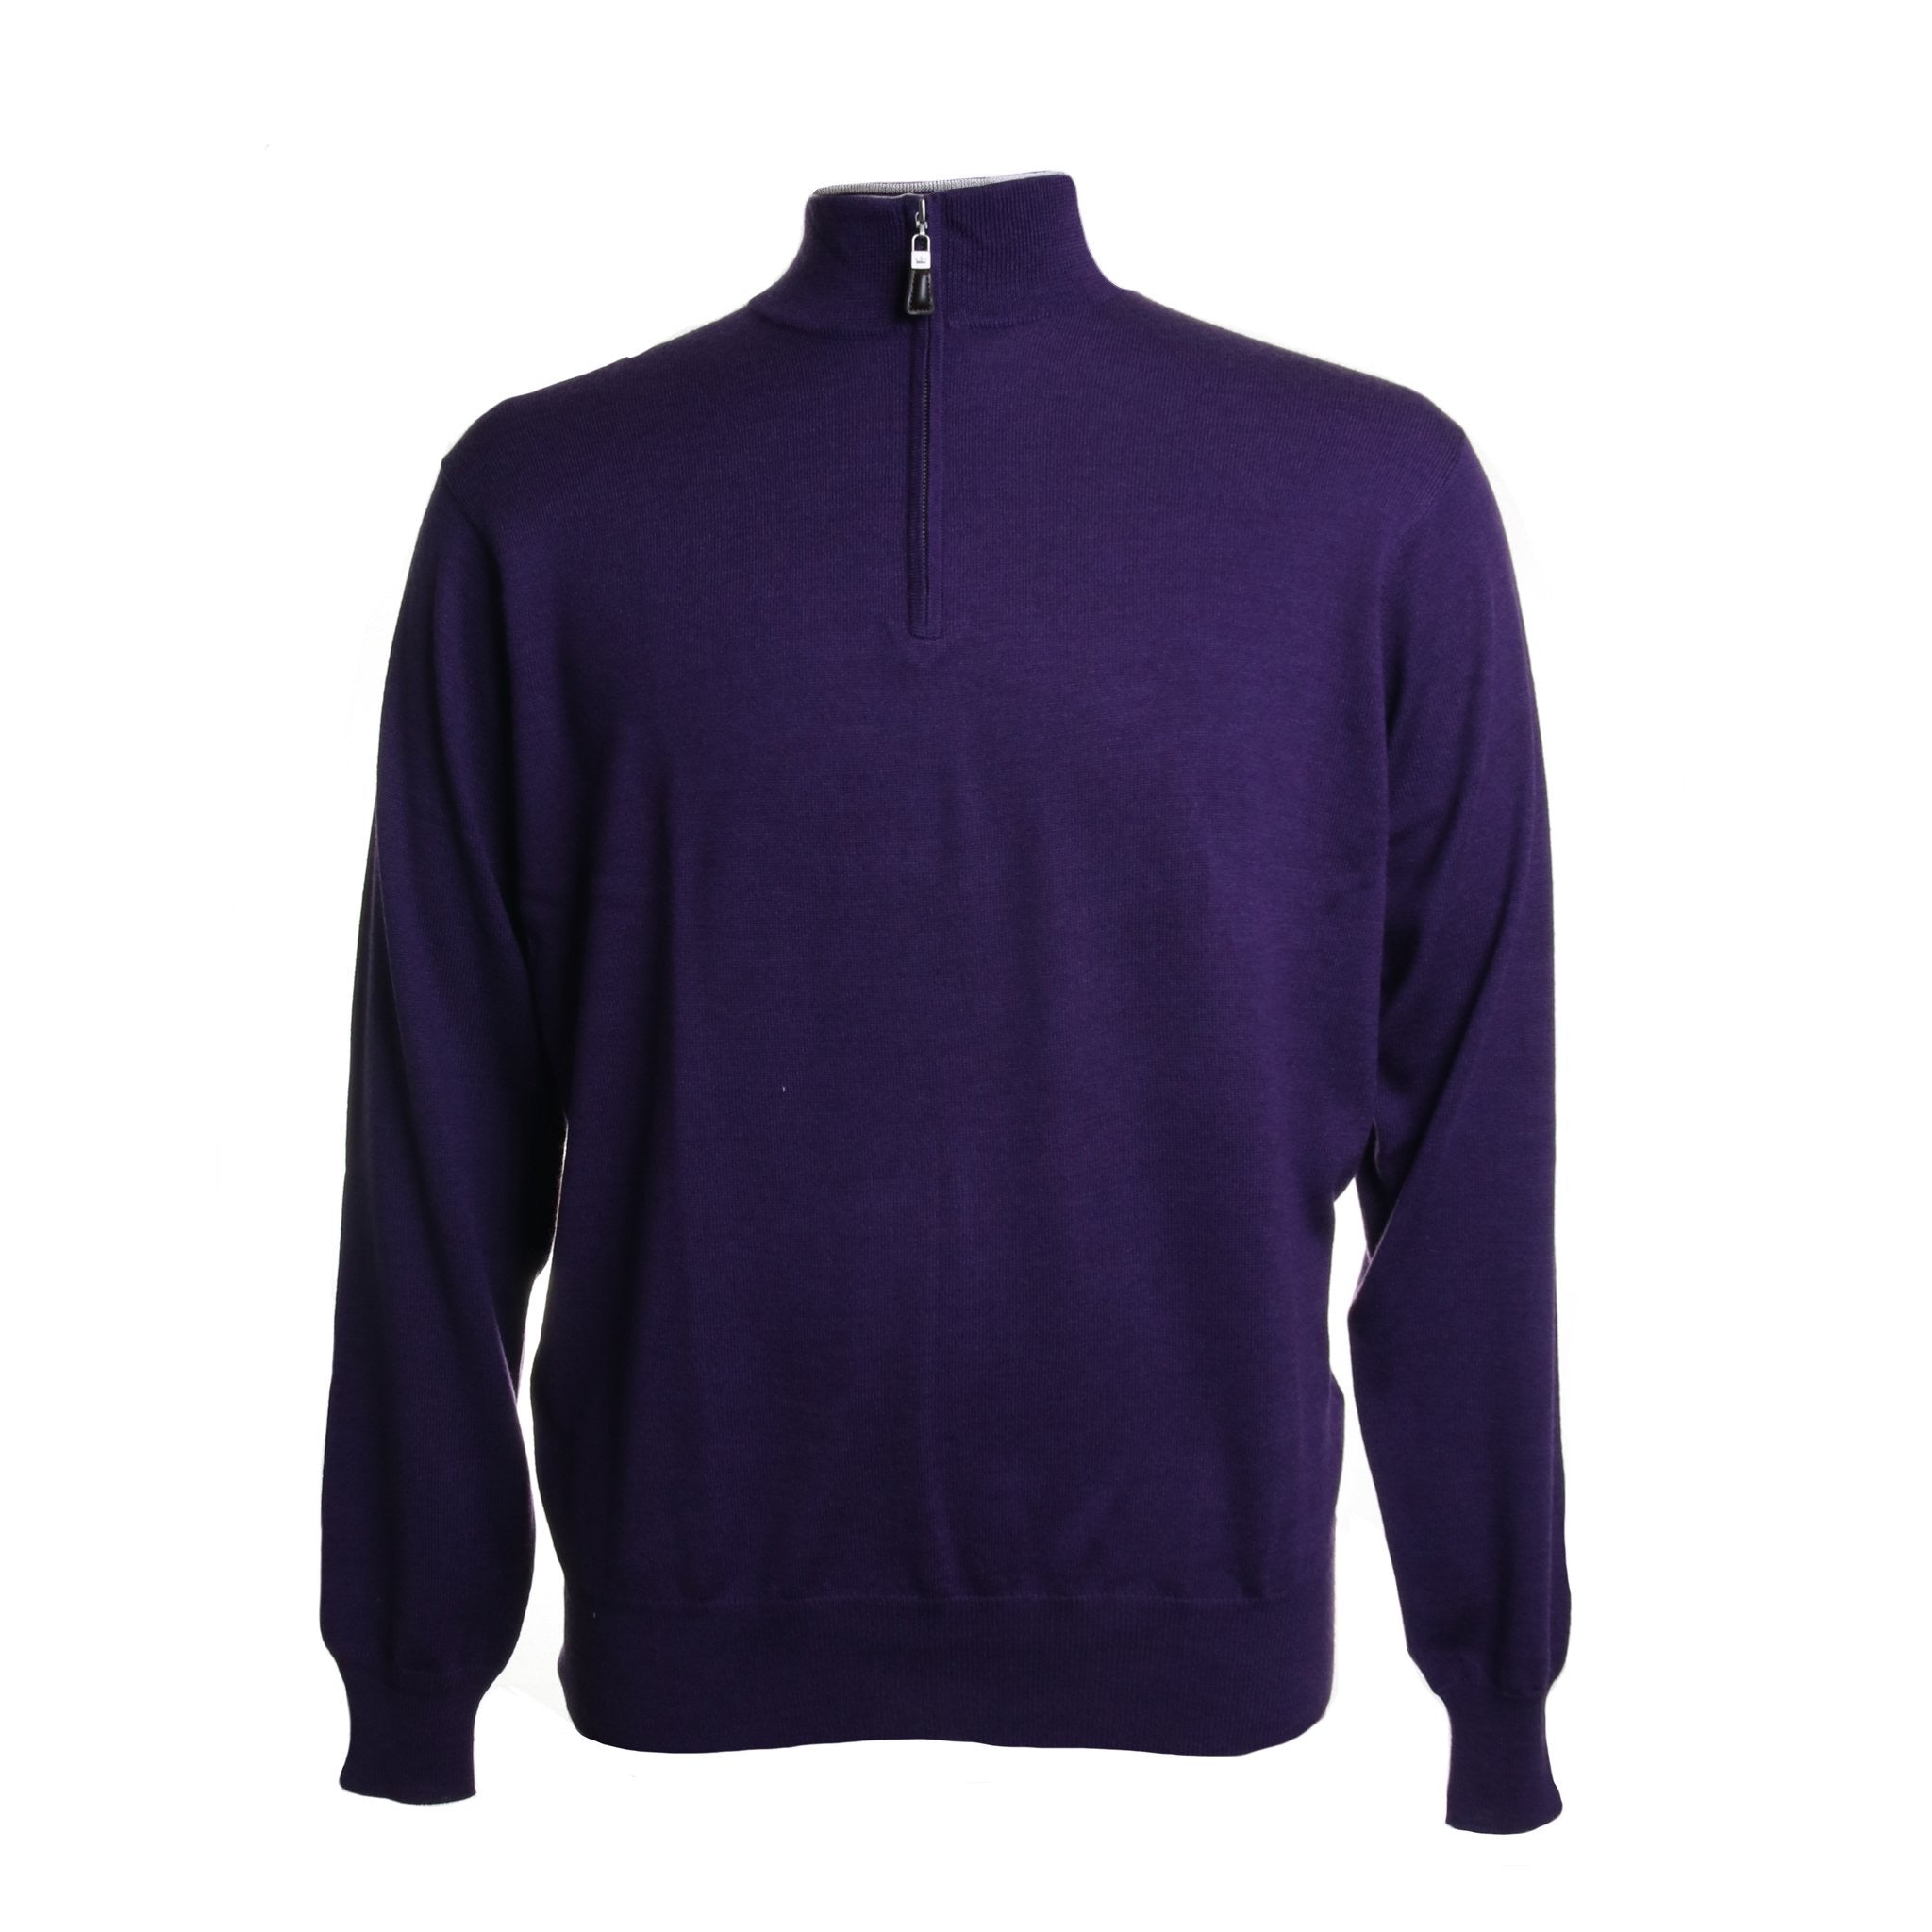 Peter Millar Crown Soft 1/4 Zip Sweater Mf19S52